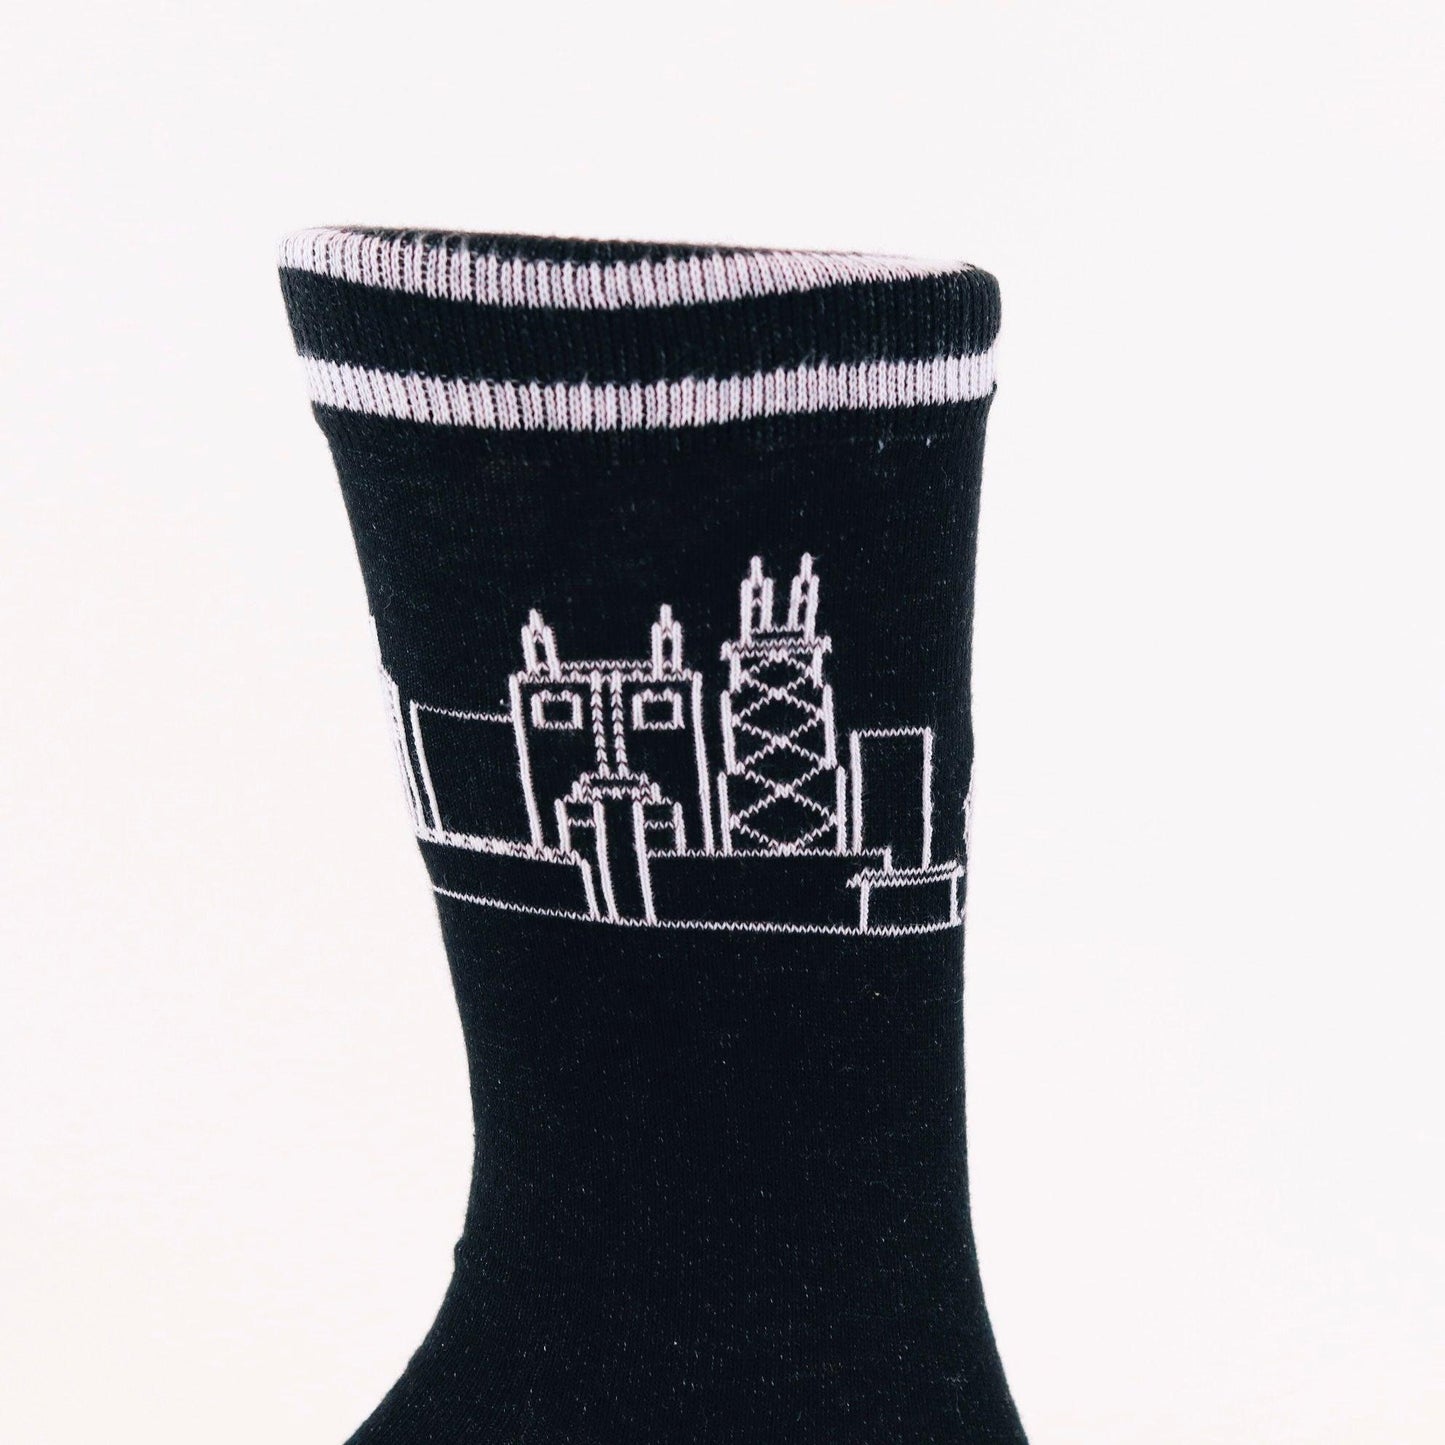 Chicago Black and White Skyline Socks - Love From USA